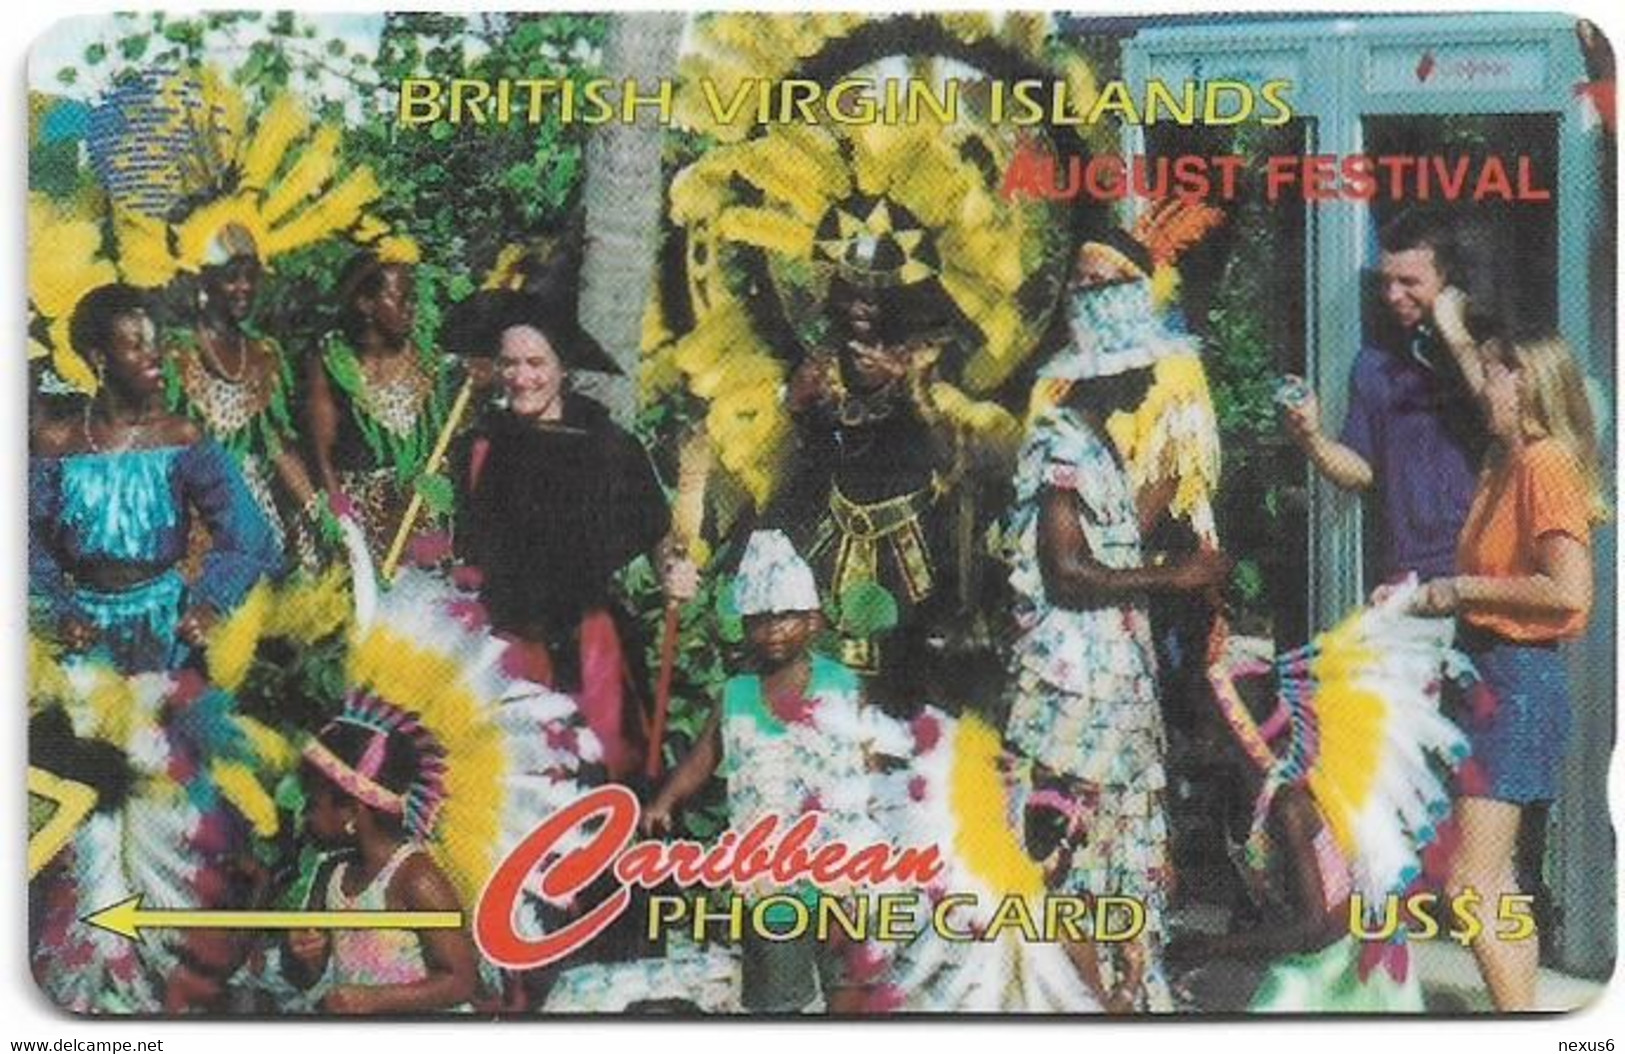 British Virgin Islands - C&W (GPT) - August Festival, 143CBVF, 1997, 17.000ex, Used - Jungferninseln (Virgin I.)